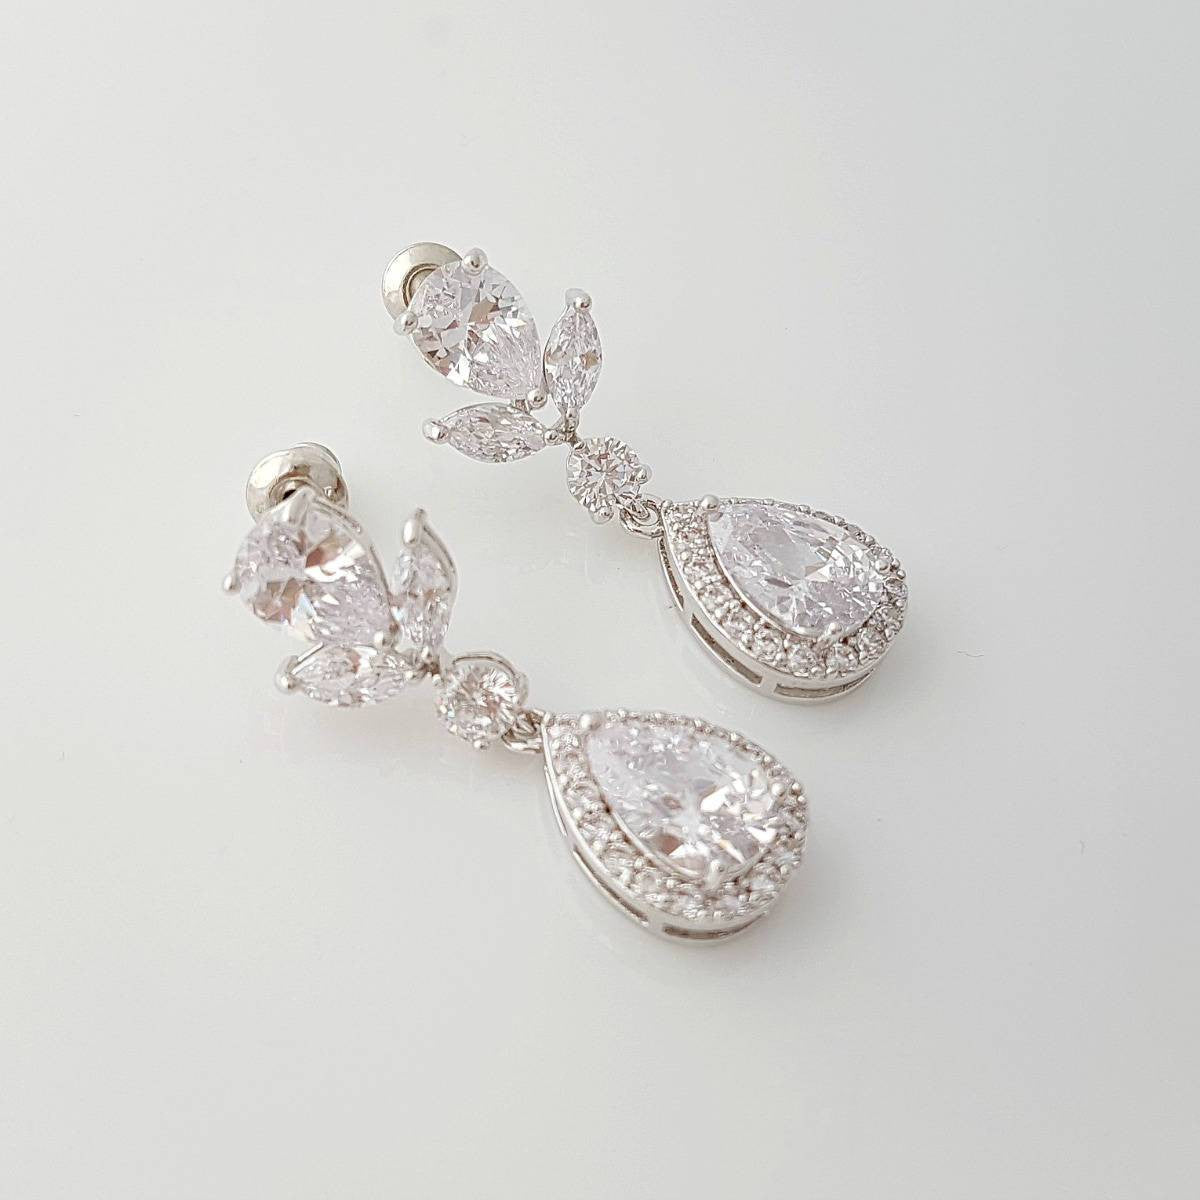 Drop Bridal Earrings Gold-Emma